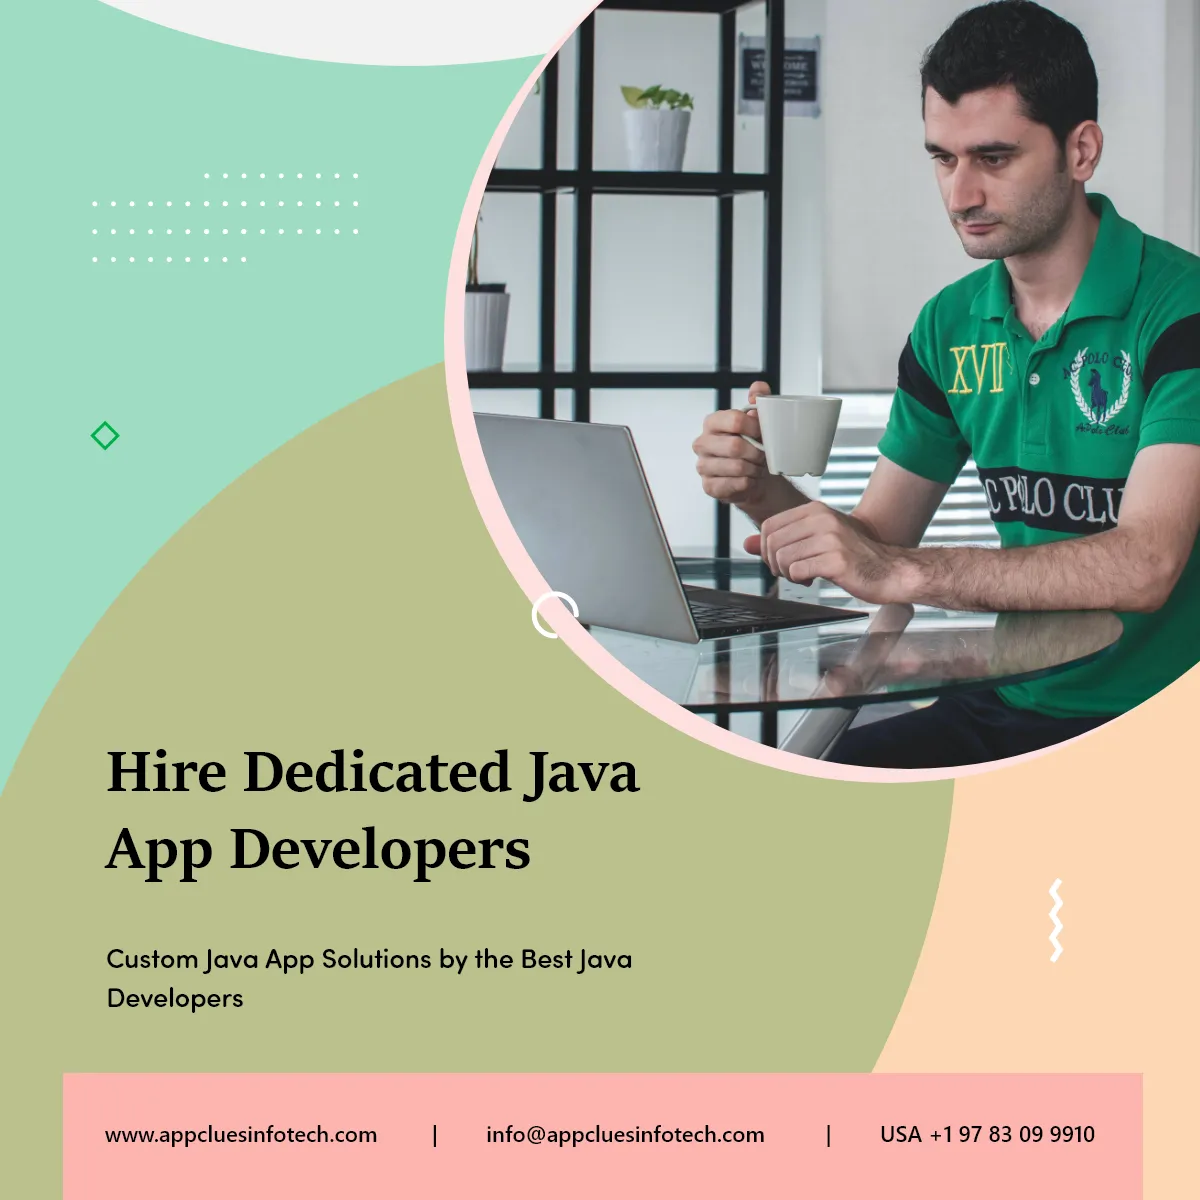 Hire Dedicated Java App Developer from AppClues Infotech